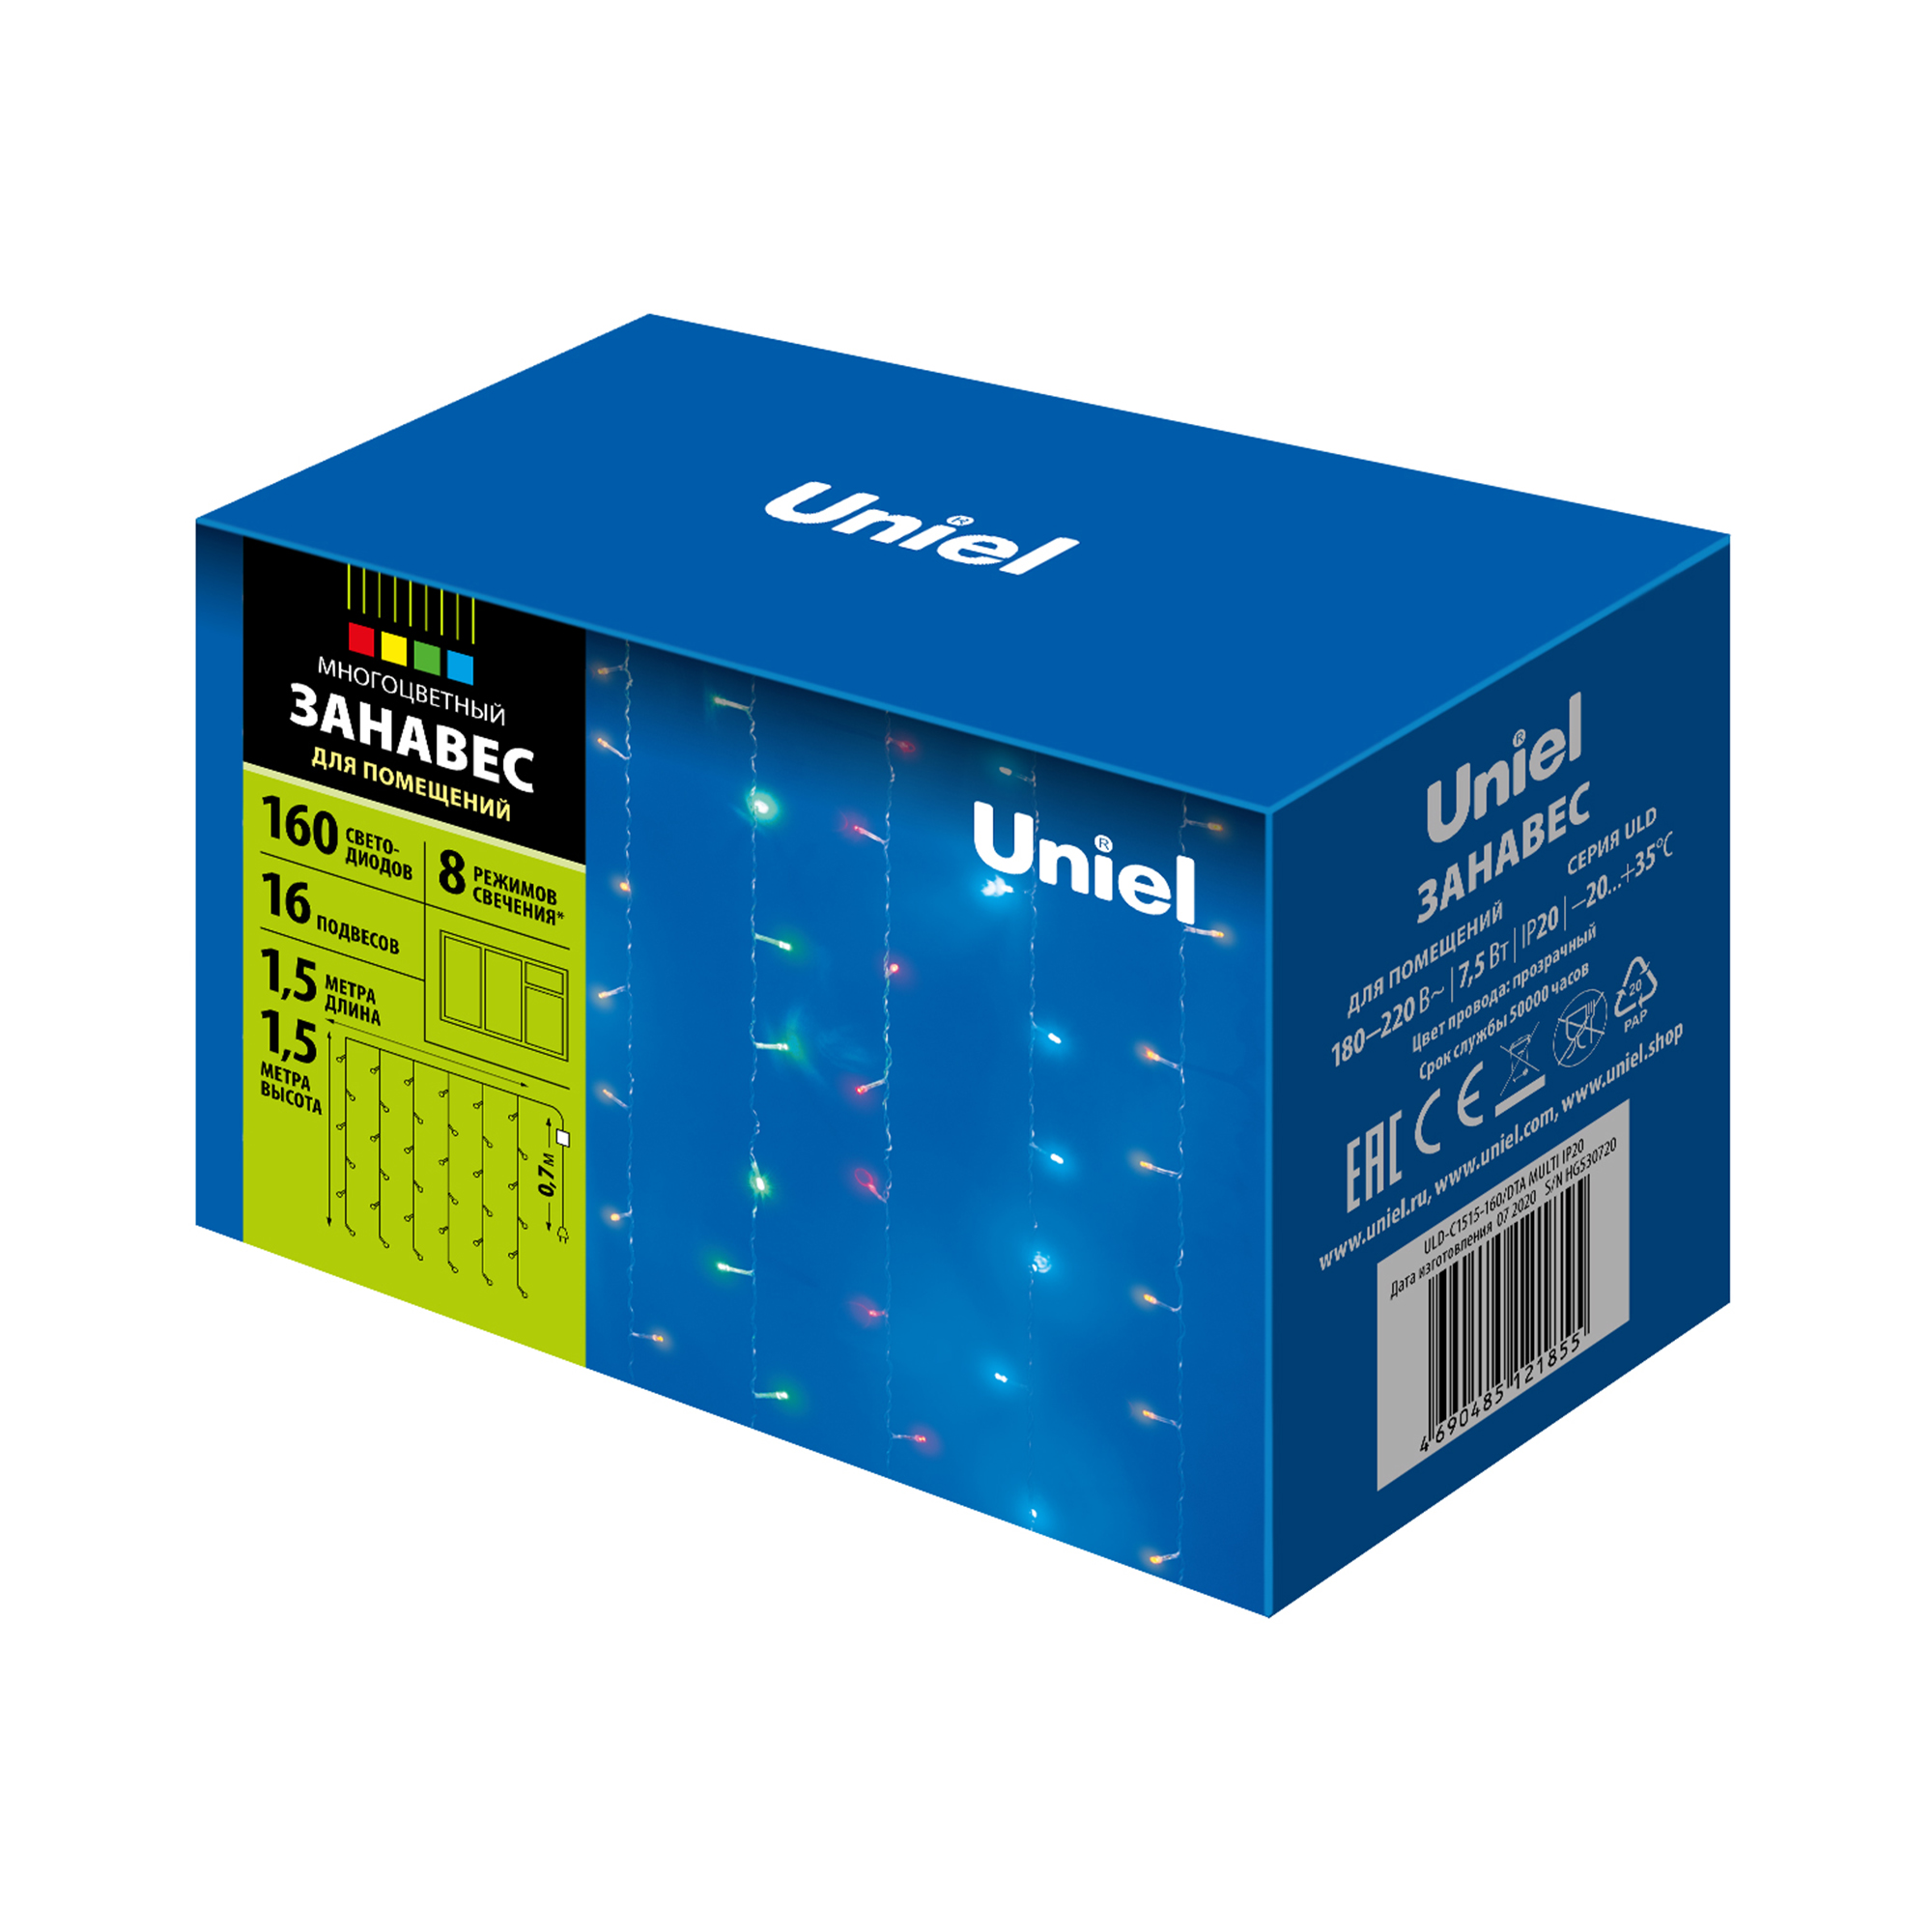 ULD-C1515-160/DTA MULTI IP20